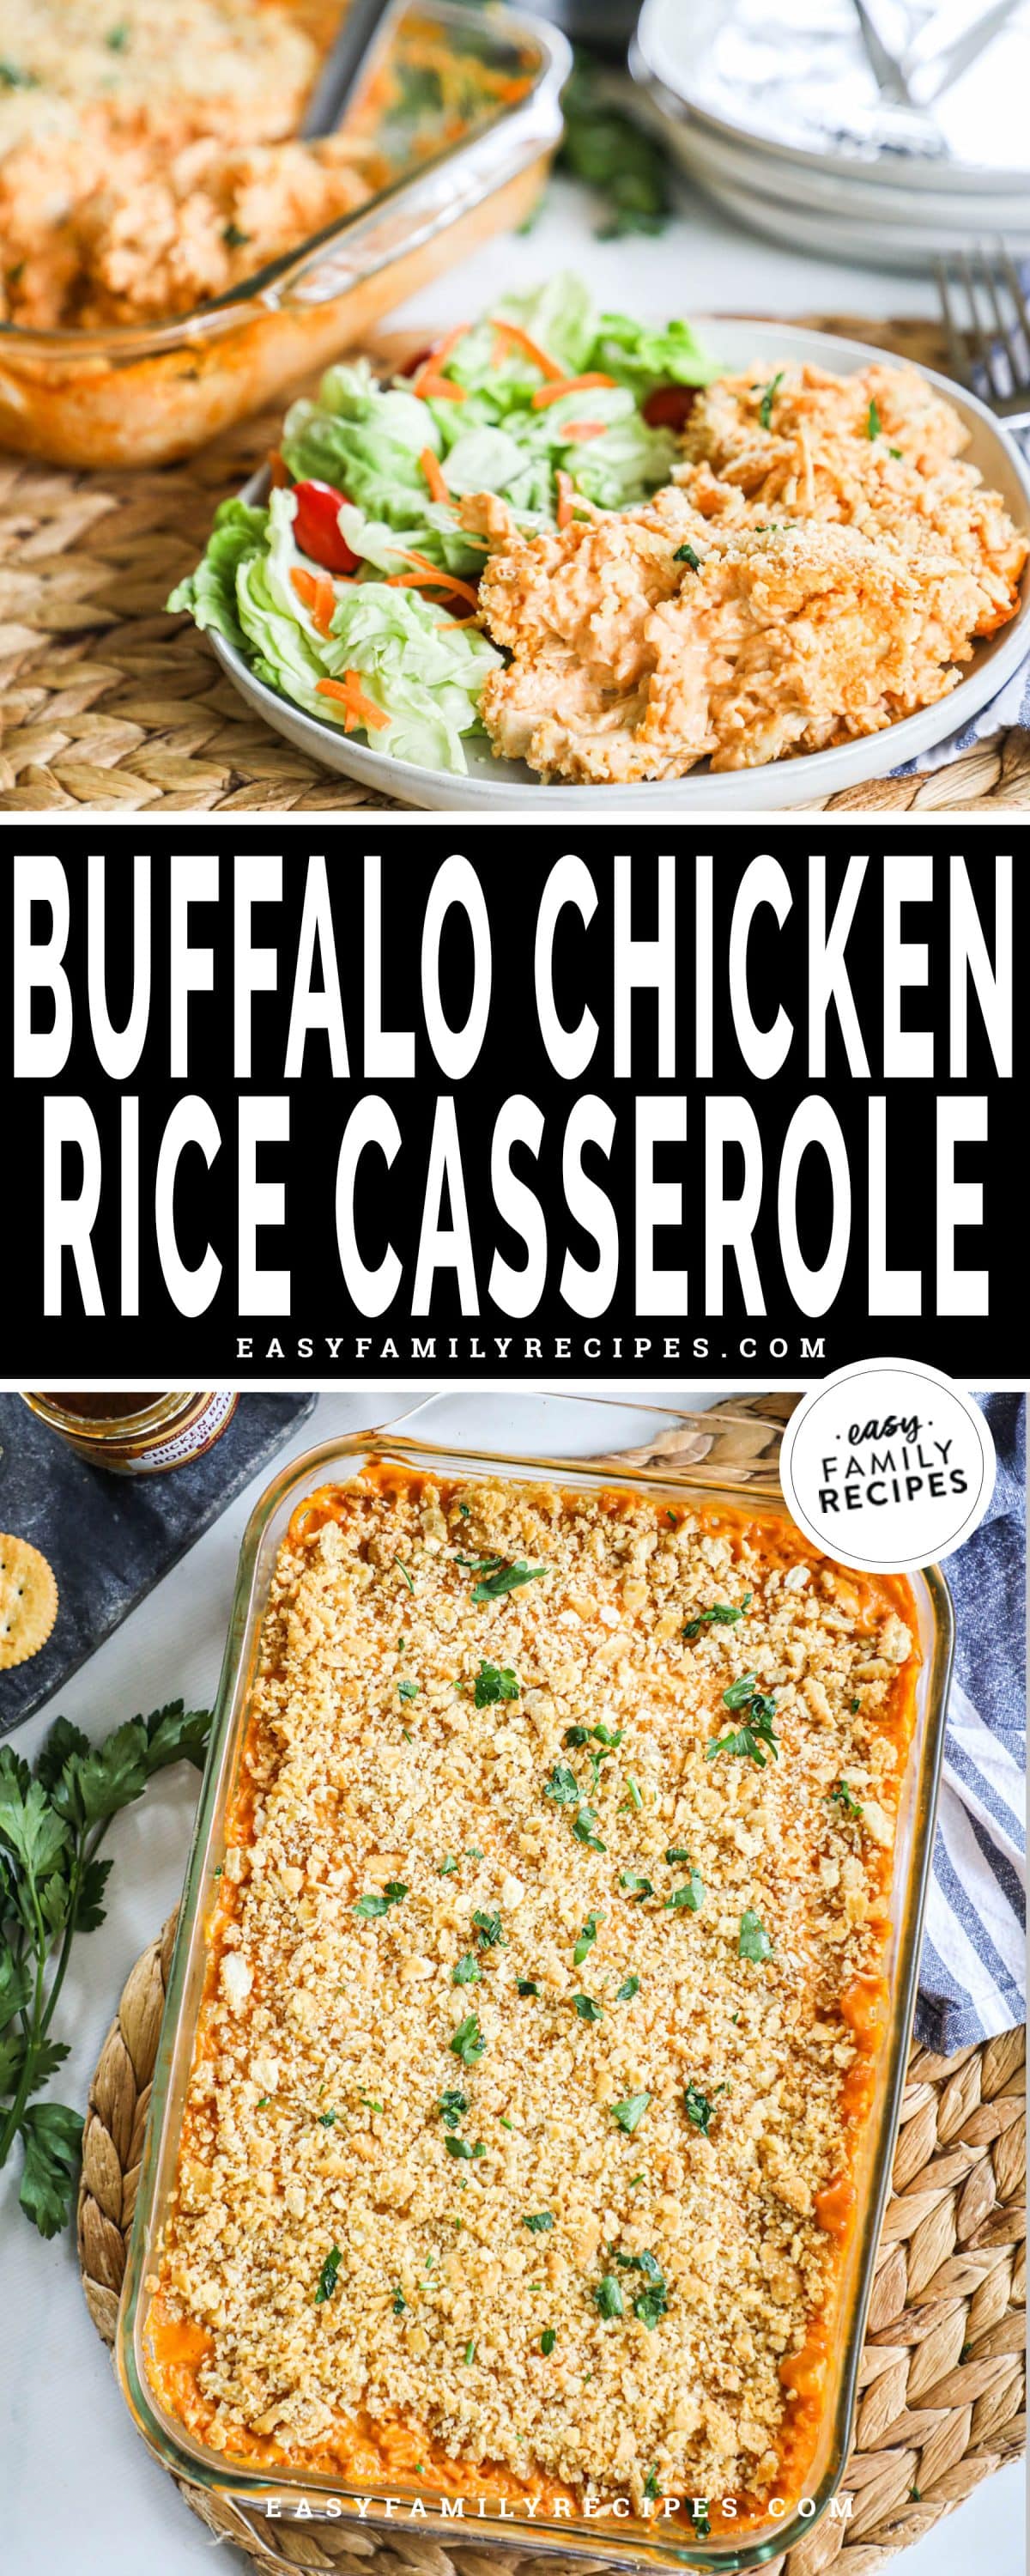 Buffalo Chicken and Rice Casserole made in a 9x13 casserole dish